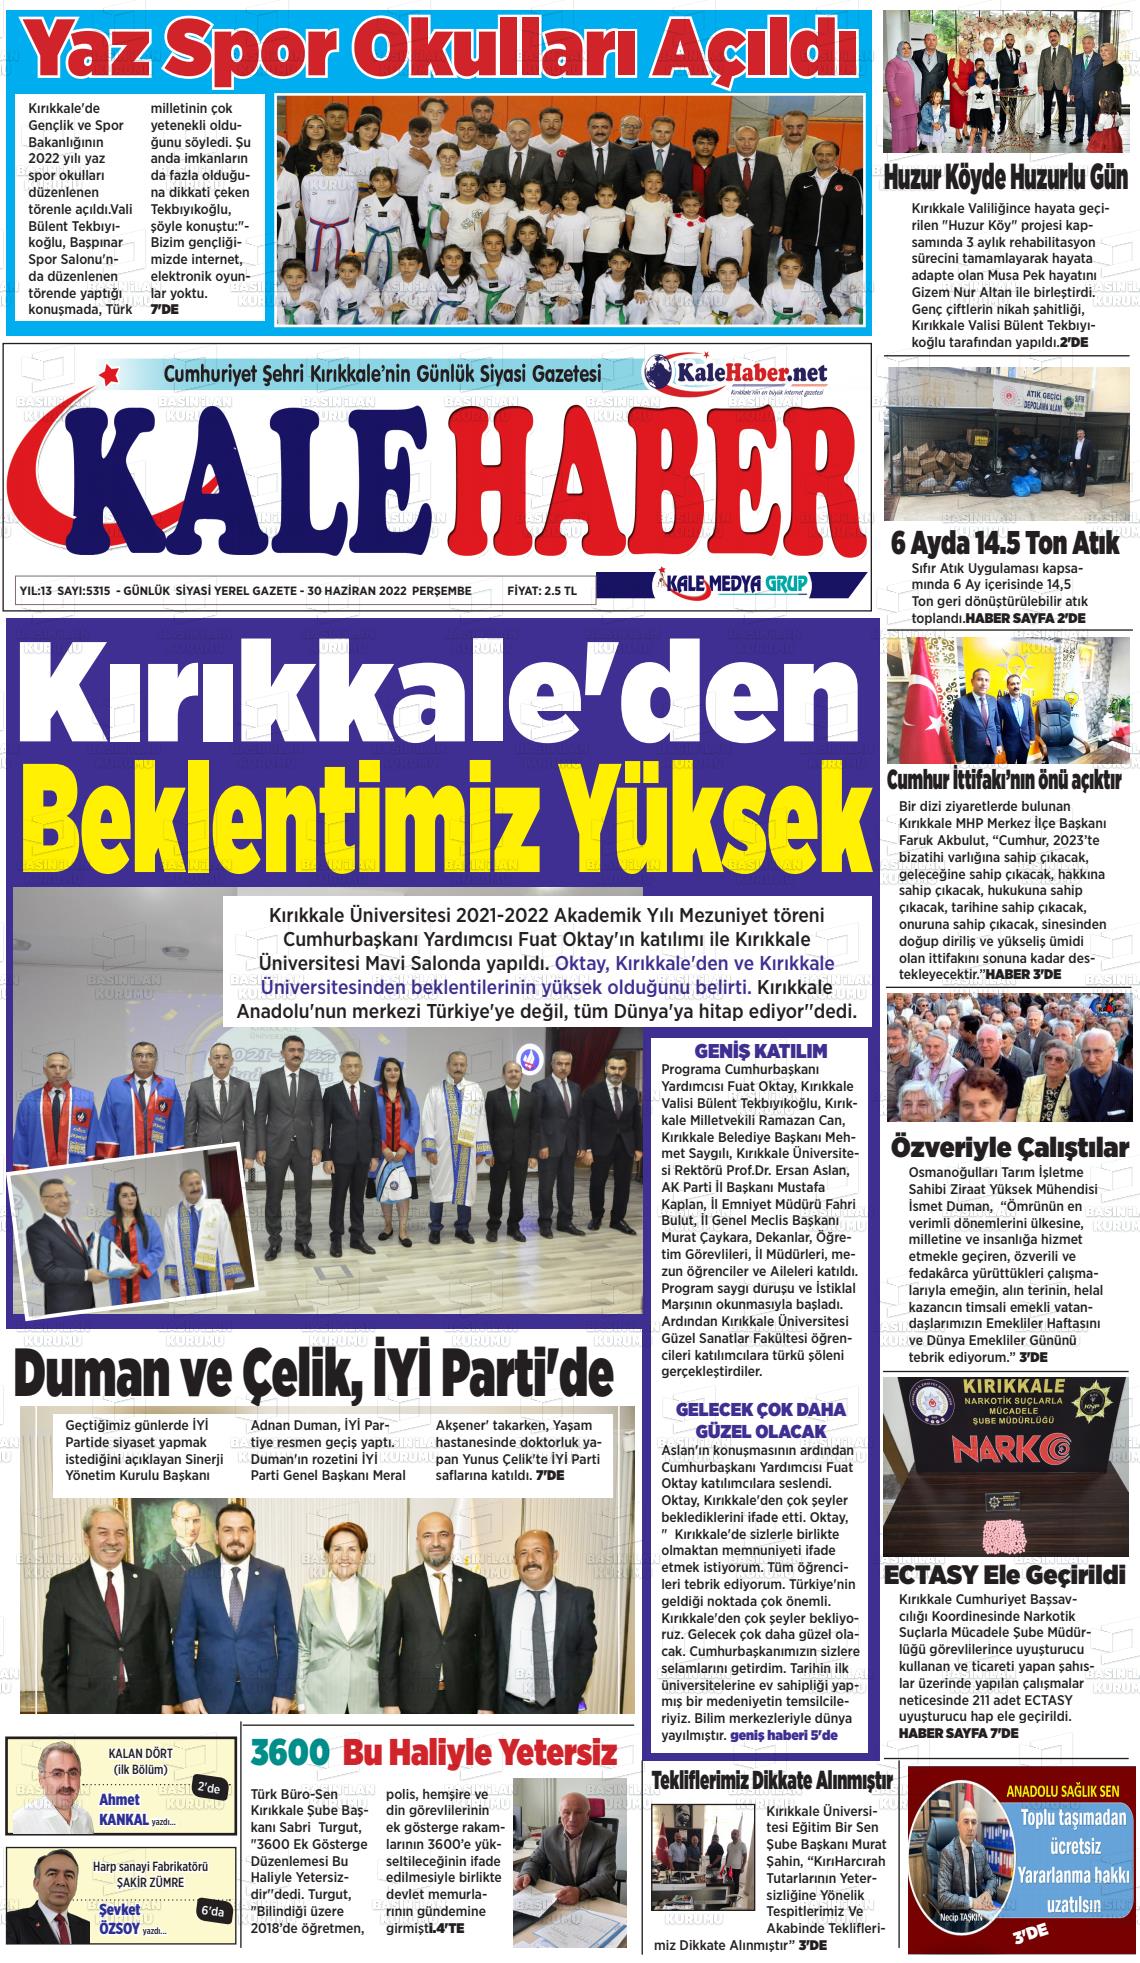 02 Temmuz 2022 Kale Haber Gazete Manşeti